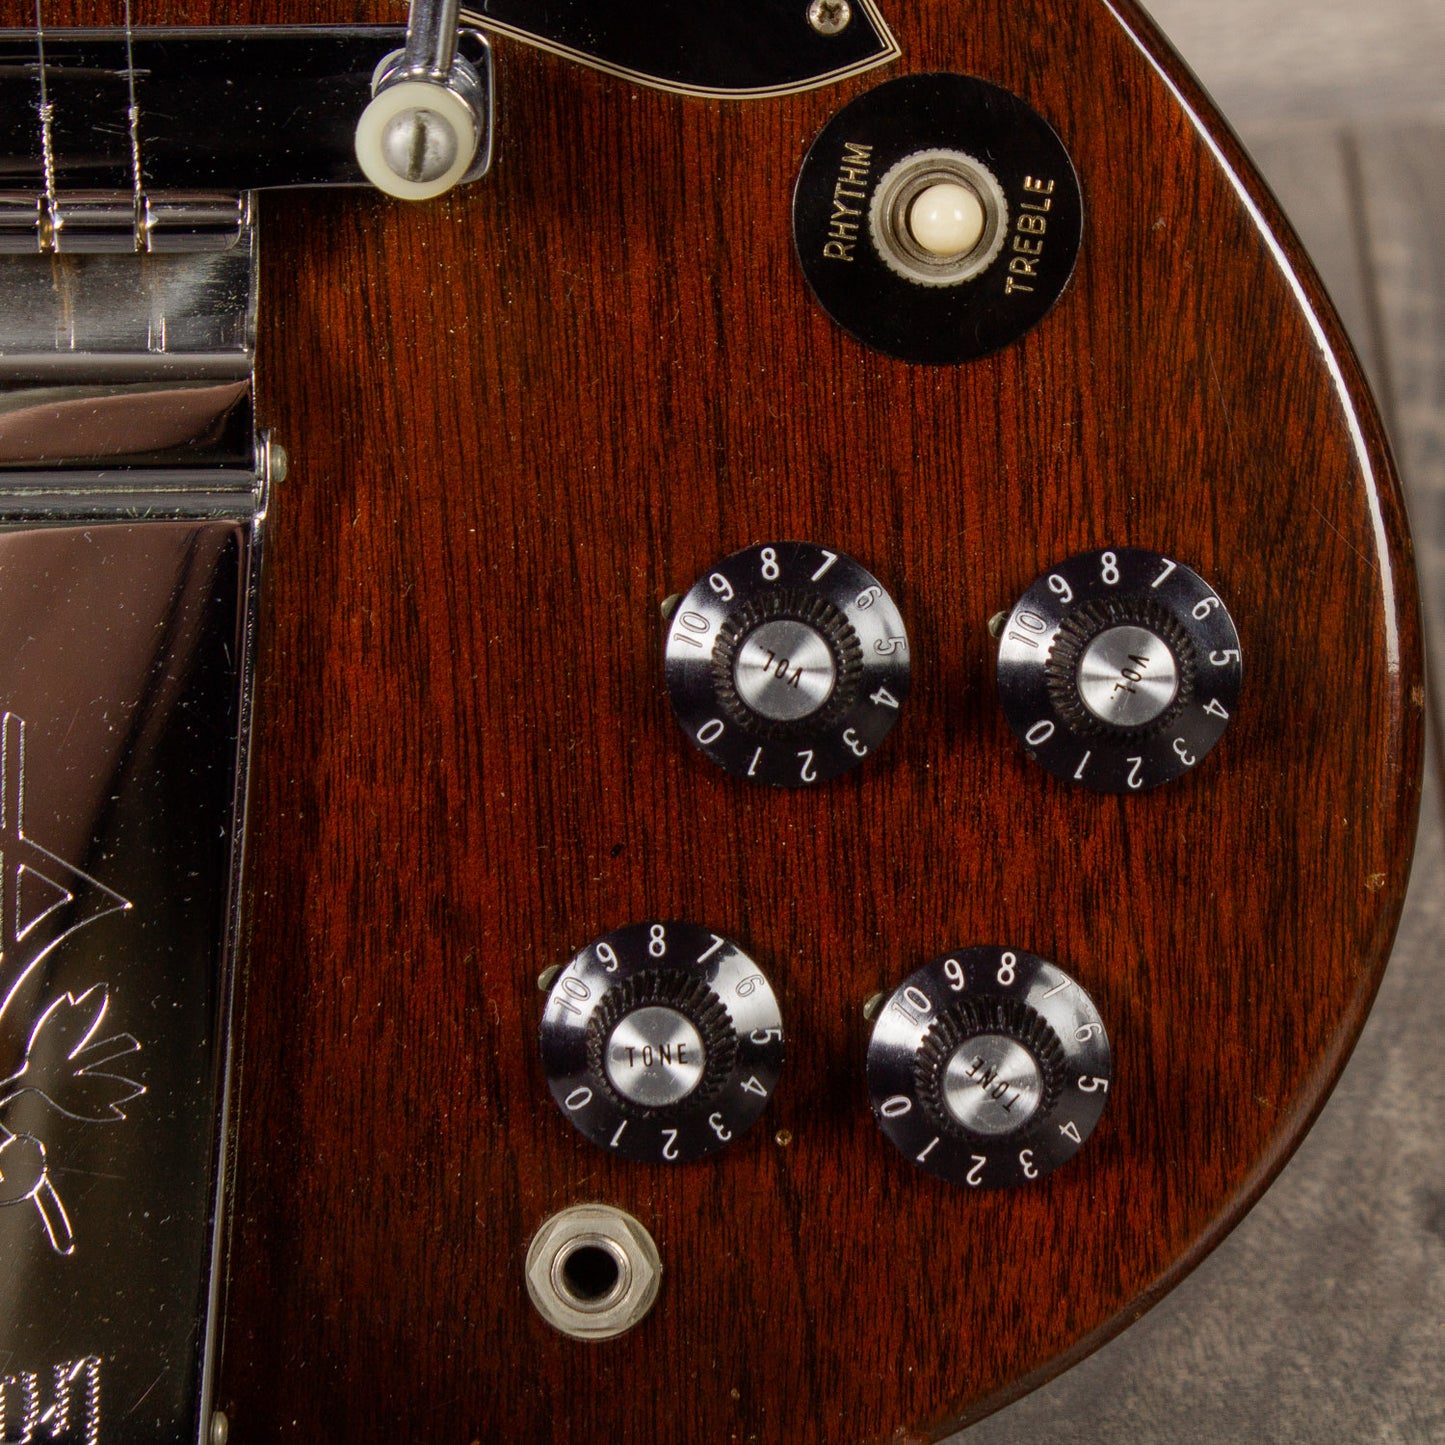 1970 Gibson SG Standard - Walnut